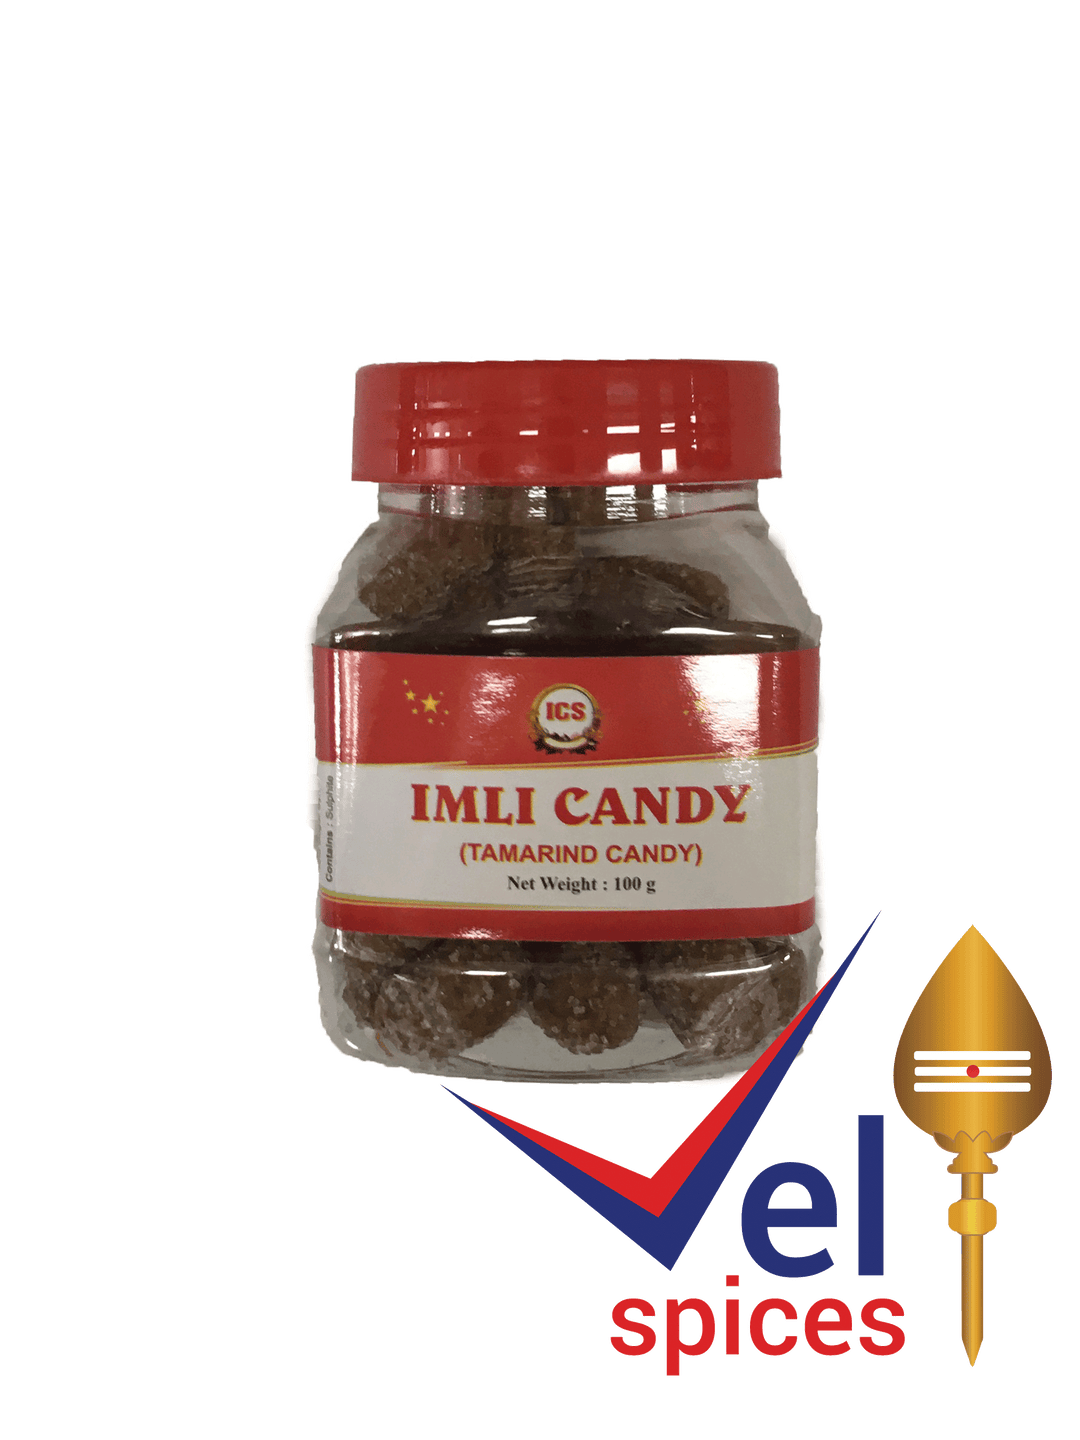 Ics Imli Candy (Tamarind Candy)100G